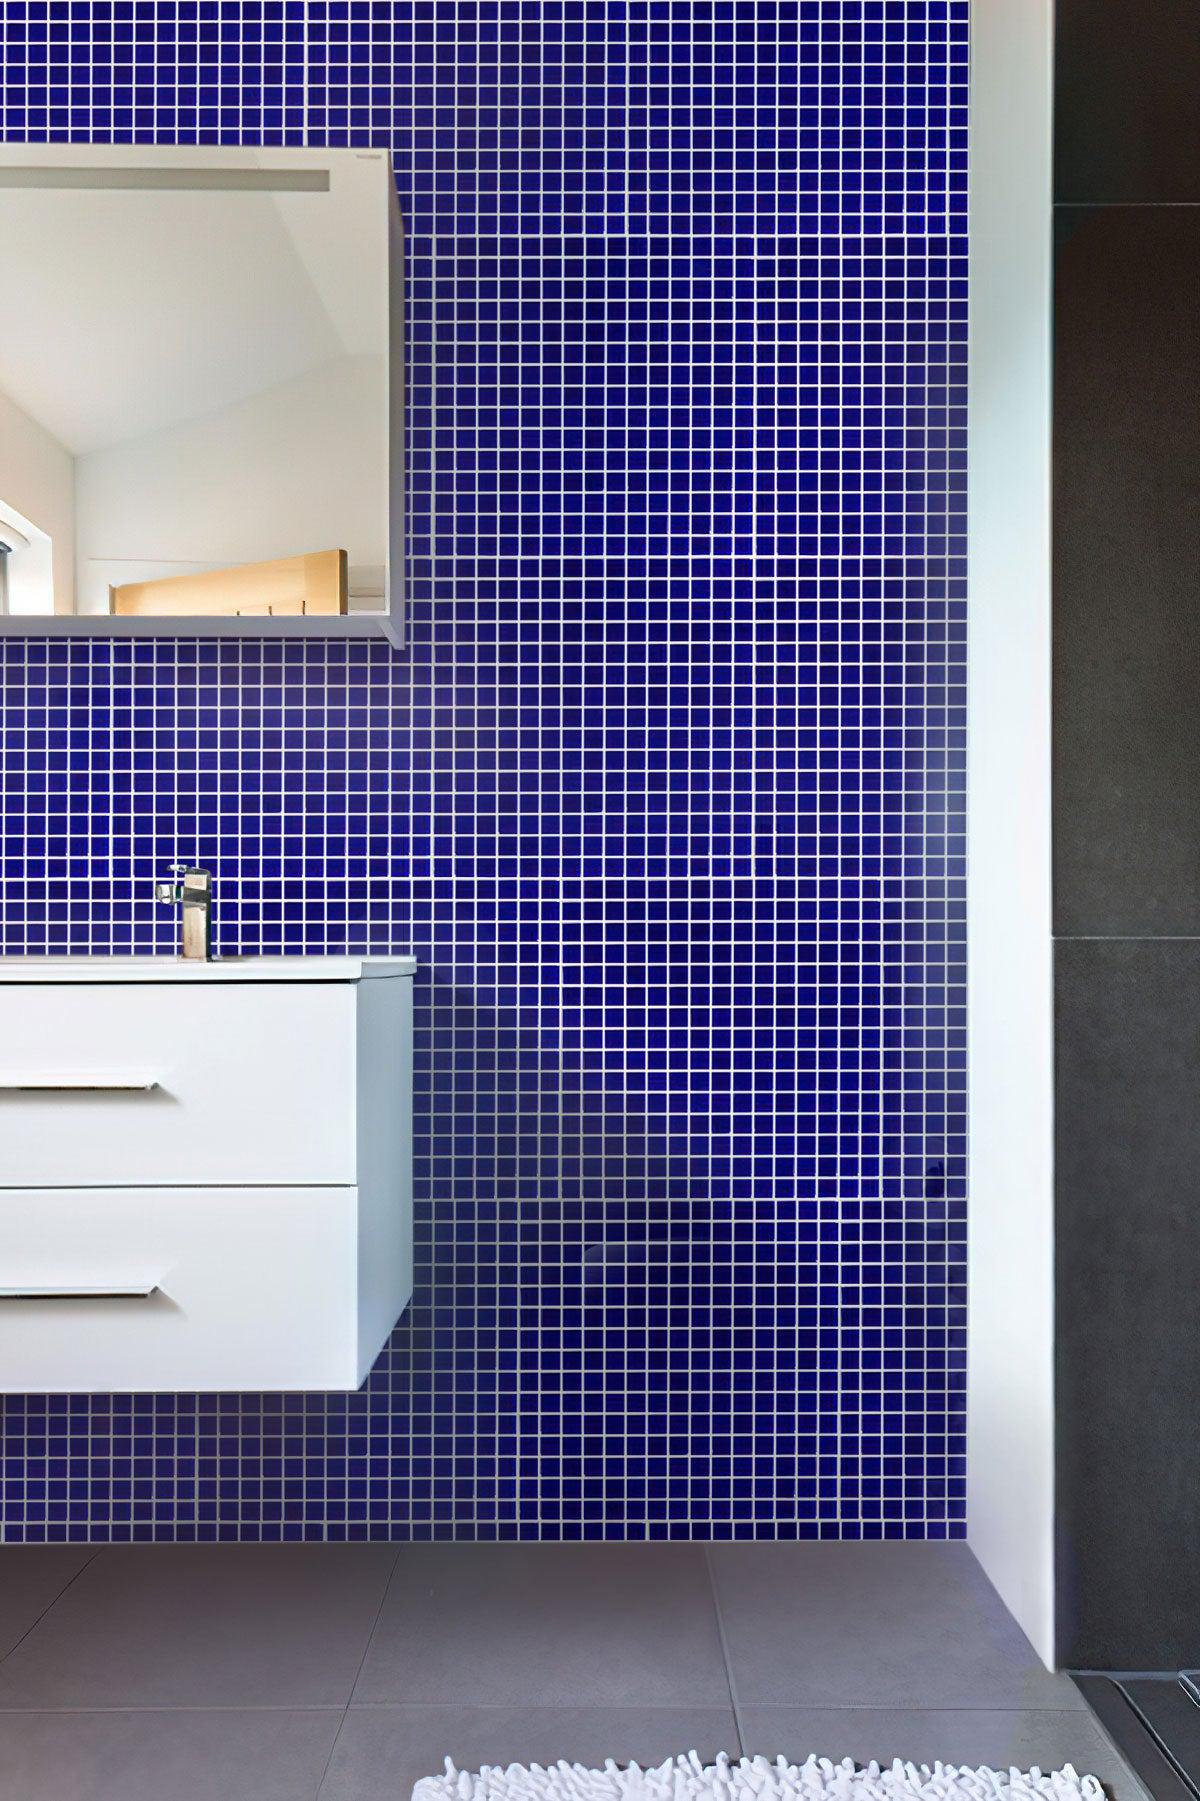 Midnight Blue Squares Glass Pool Tile Bathroom Backsplash